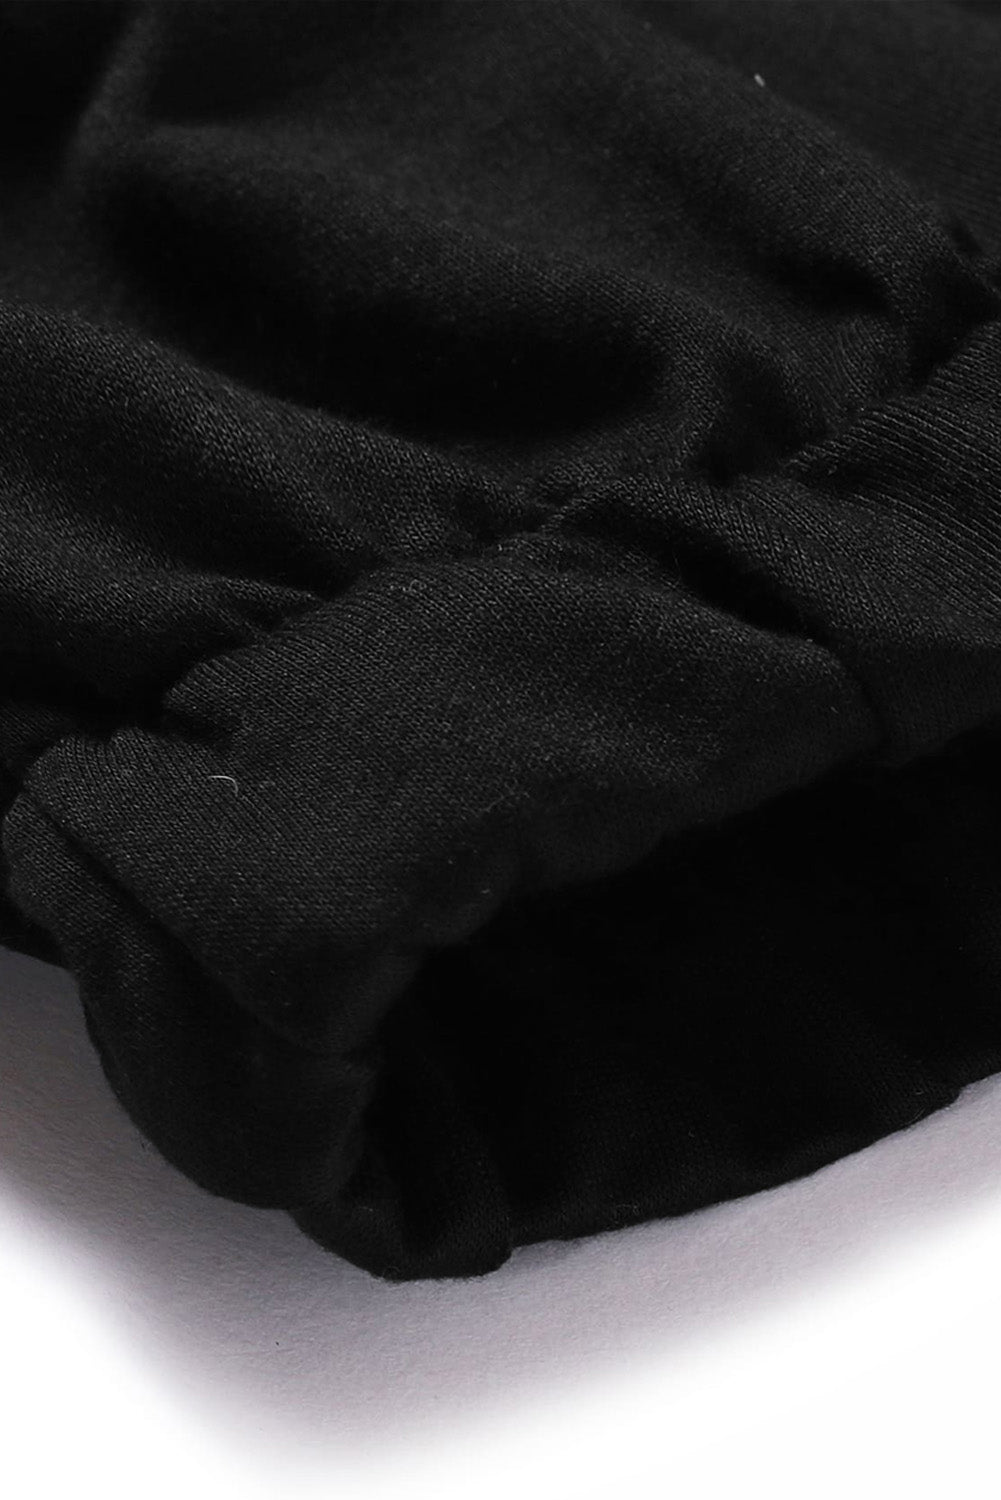 Black COWBOY Steer Head Print Drawstring High Waist Men's Sweatpants Men's Pants JT's Designer Fashion